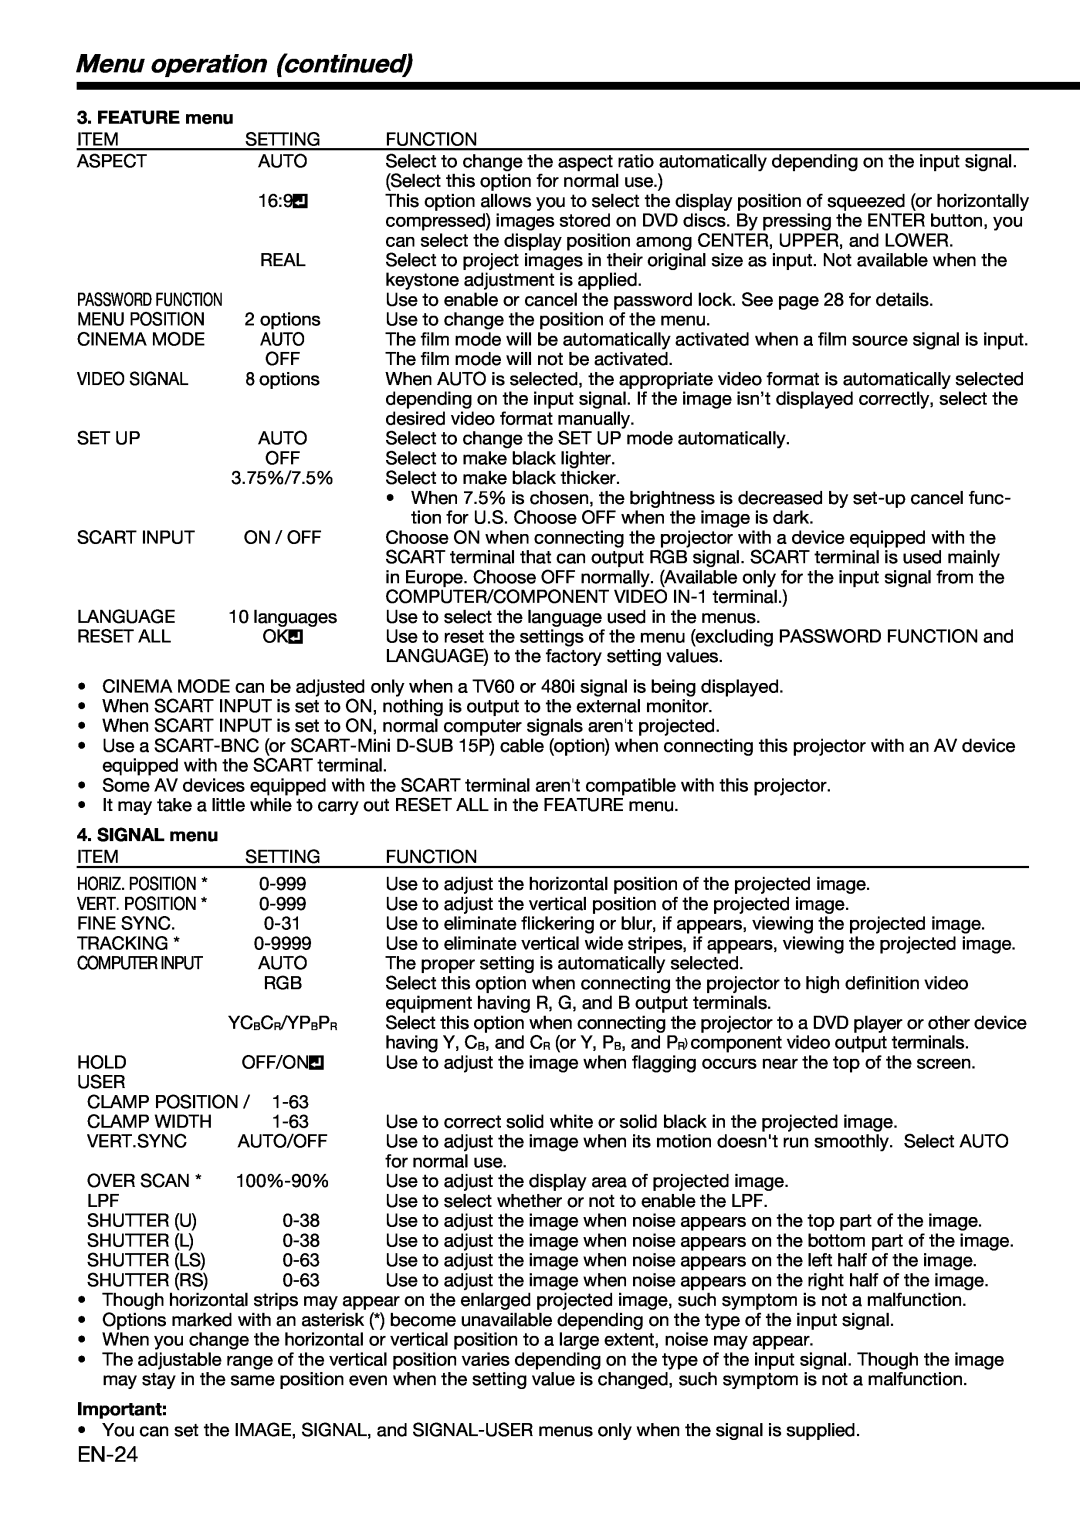 Mitsubishi Electronics XD490U user manual Menu operation continued, EN-24, FEATURE menu, SIGNAL menu 